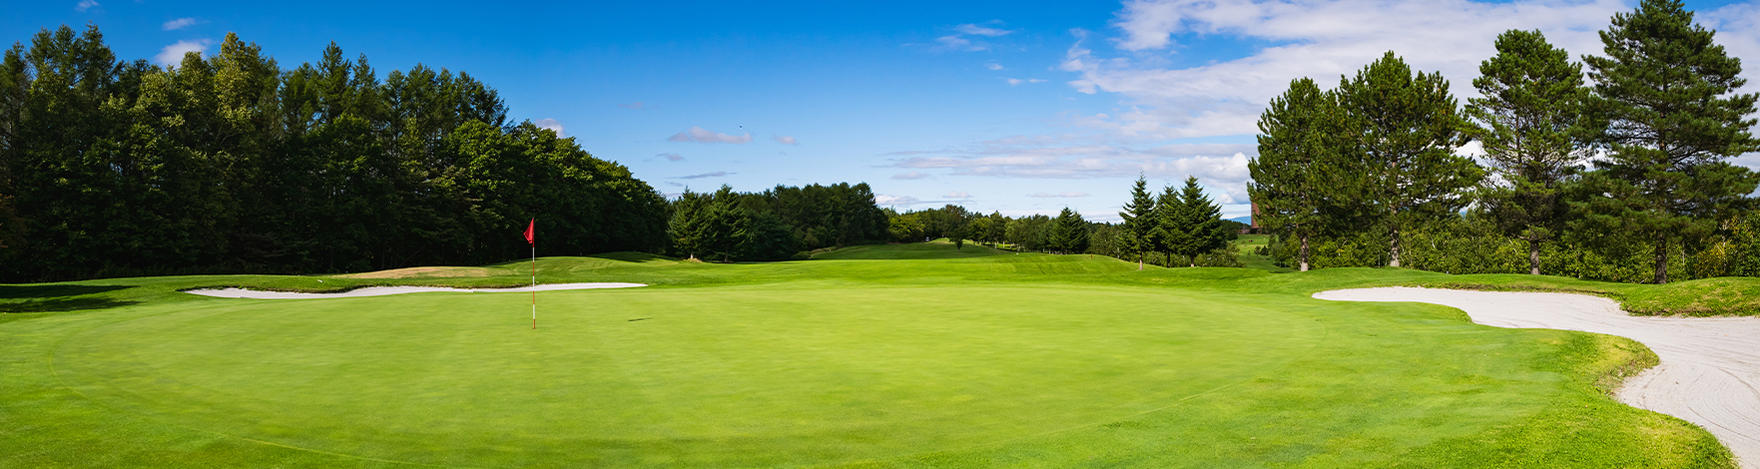 Best Golf Courses - banner